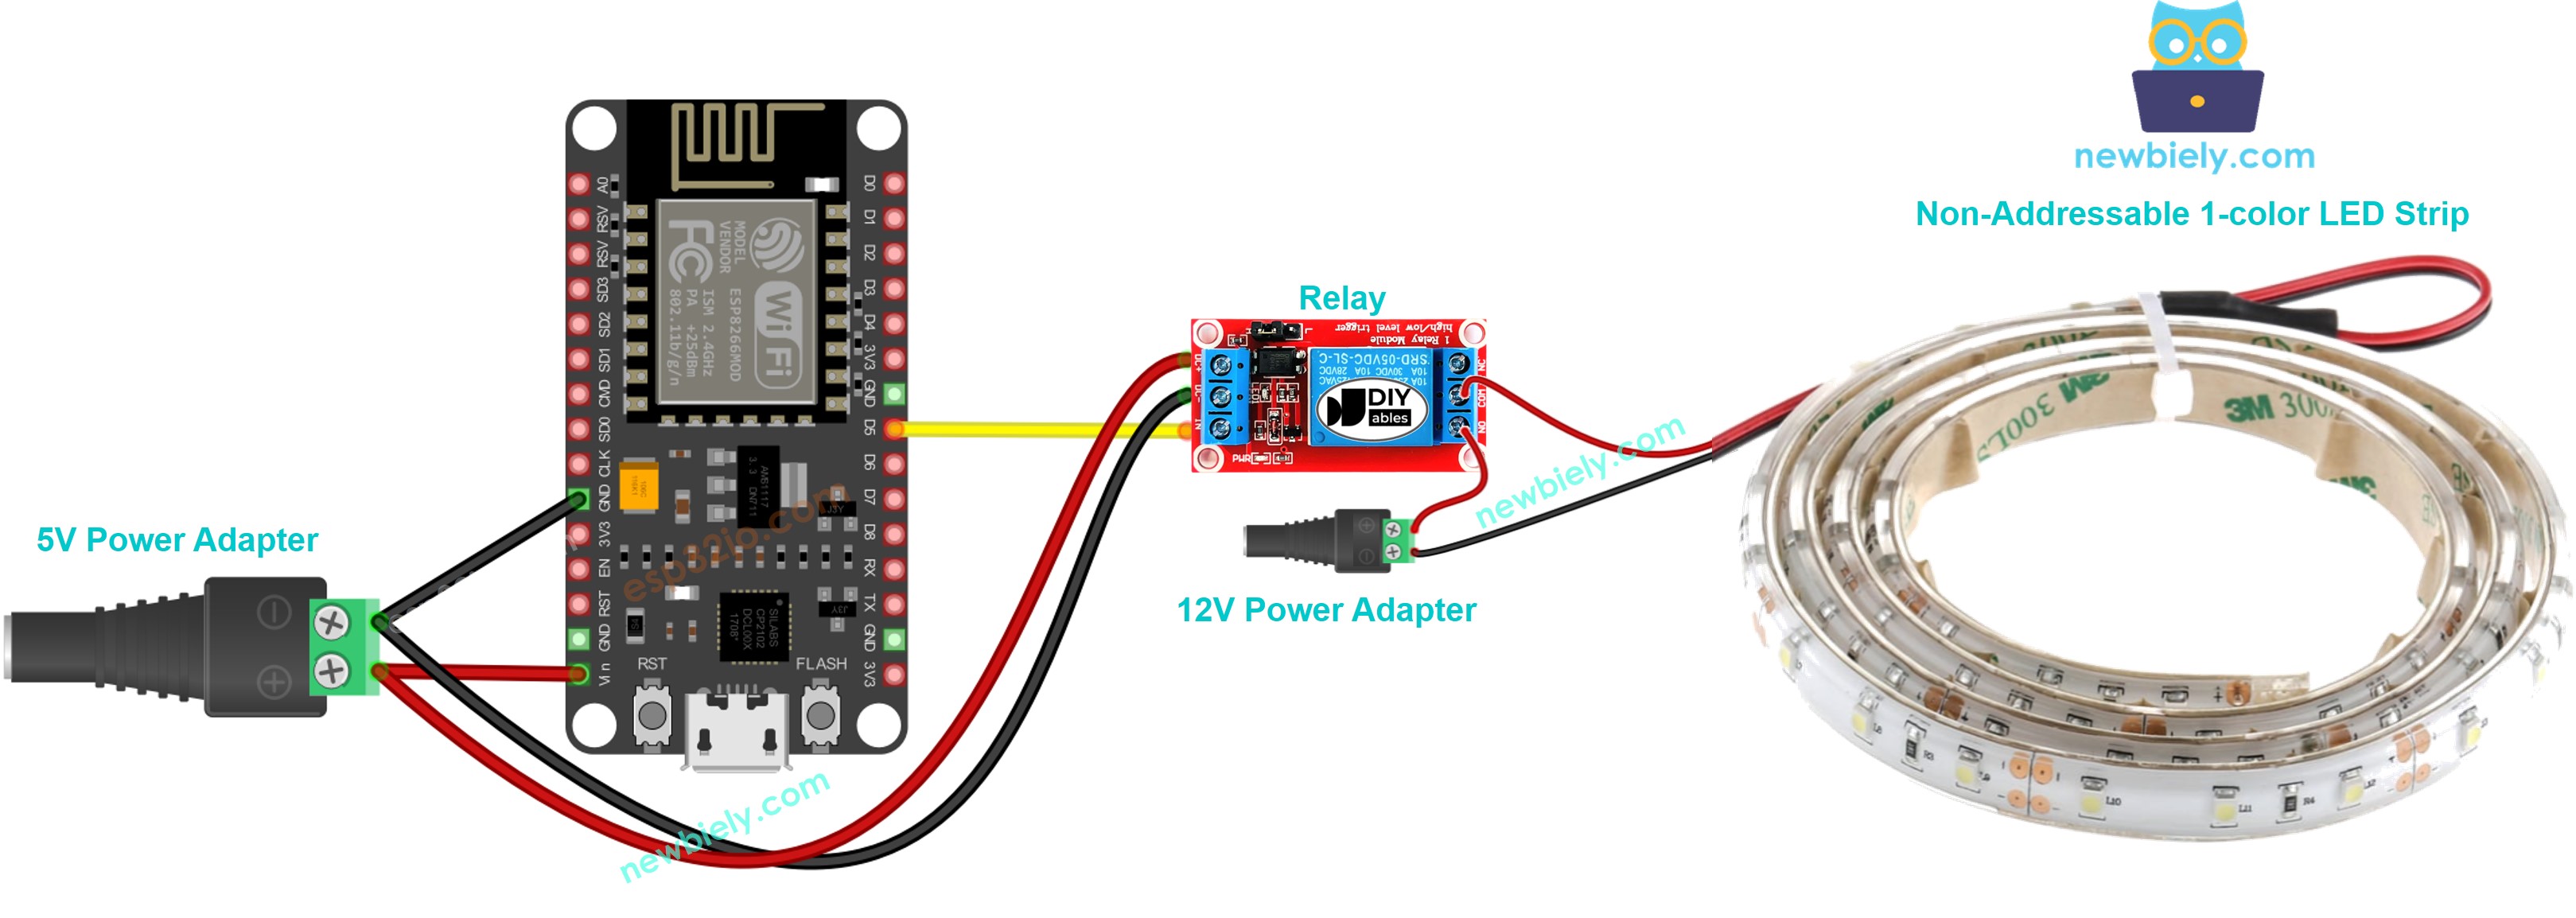 The wiring diagram between ESP8266 NodeMCU and 12V LED strip